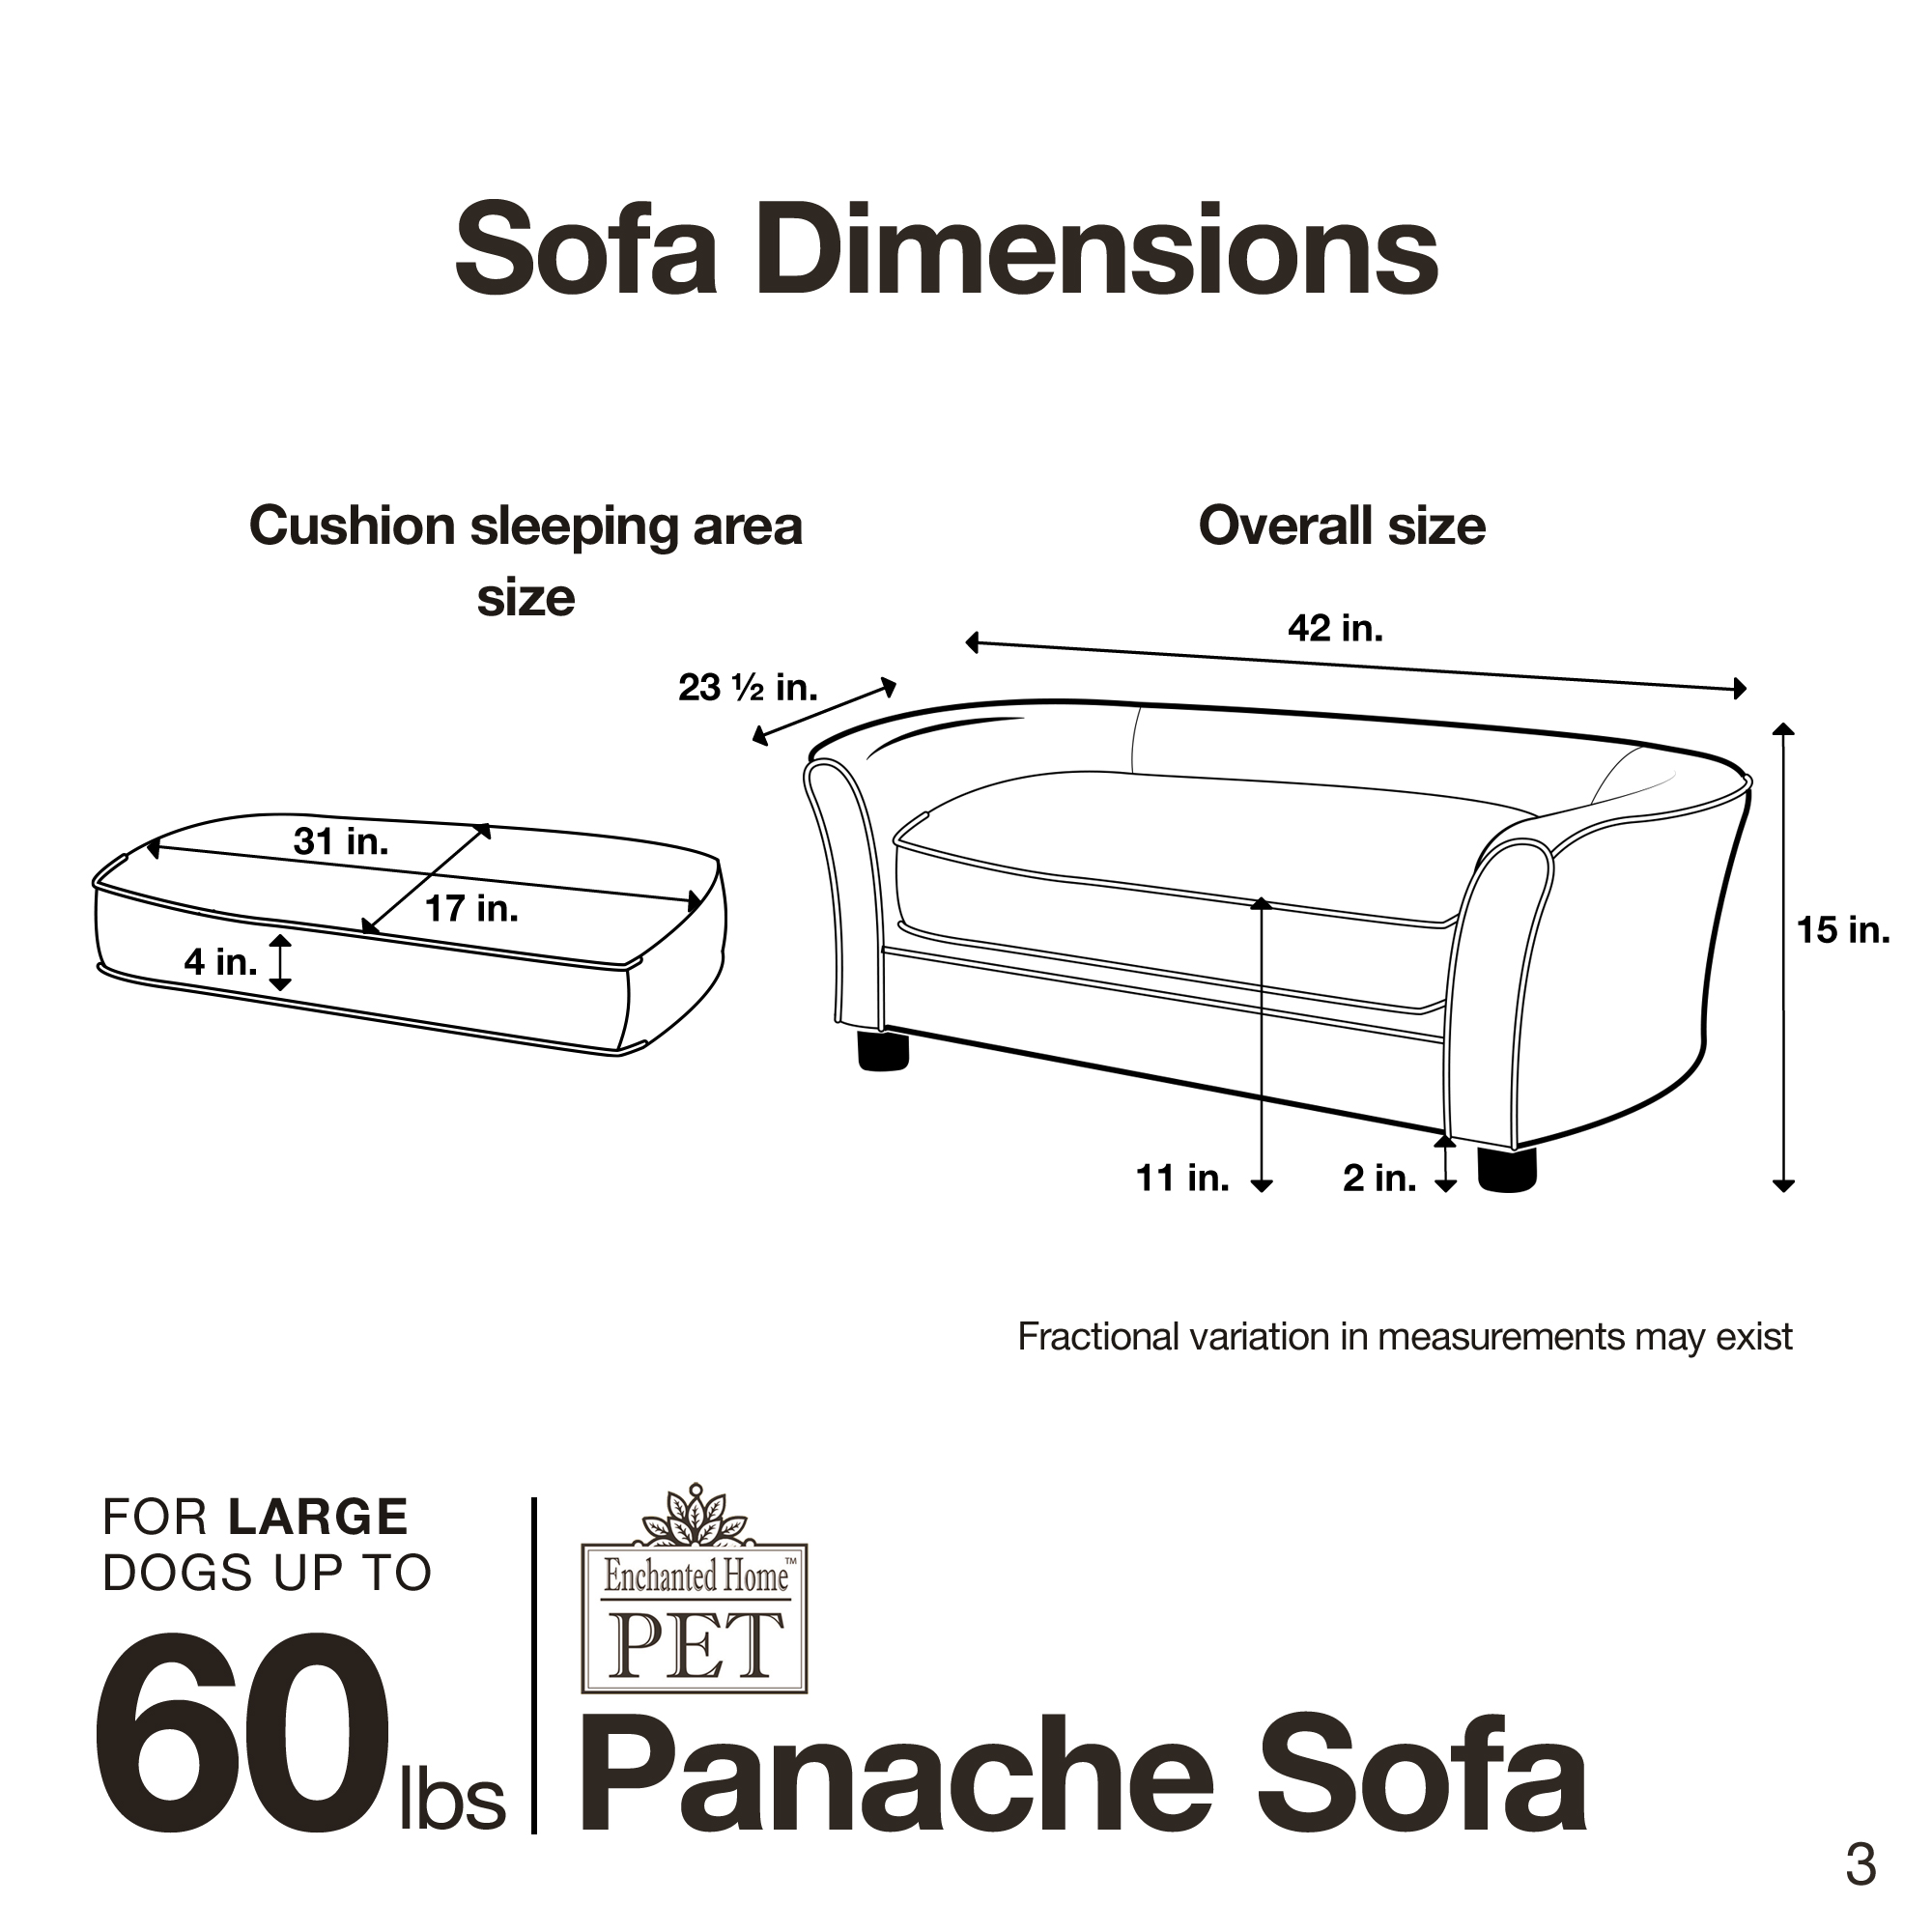 Ultra Plush Panache Pet Sofa